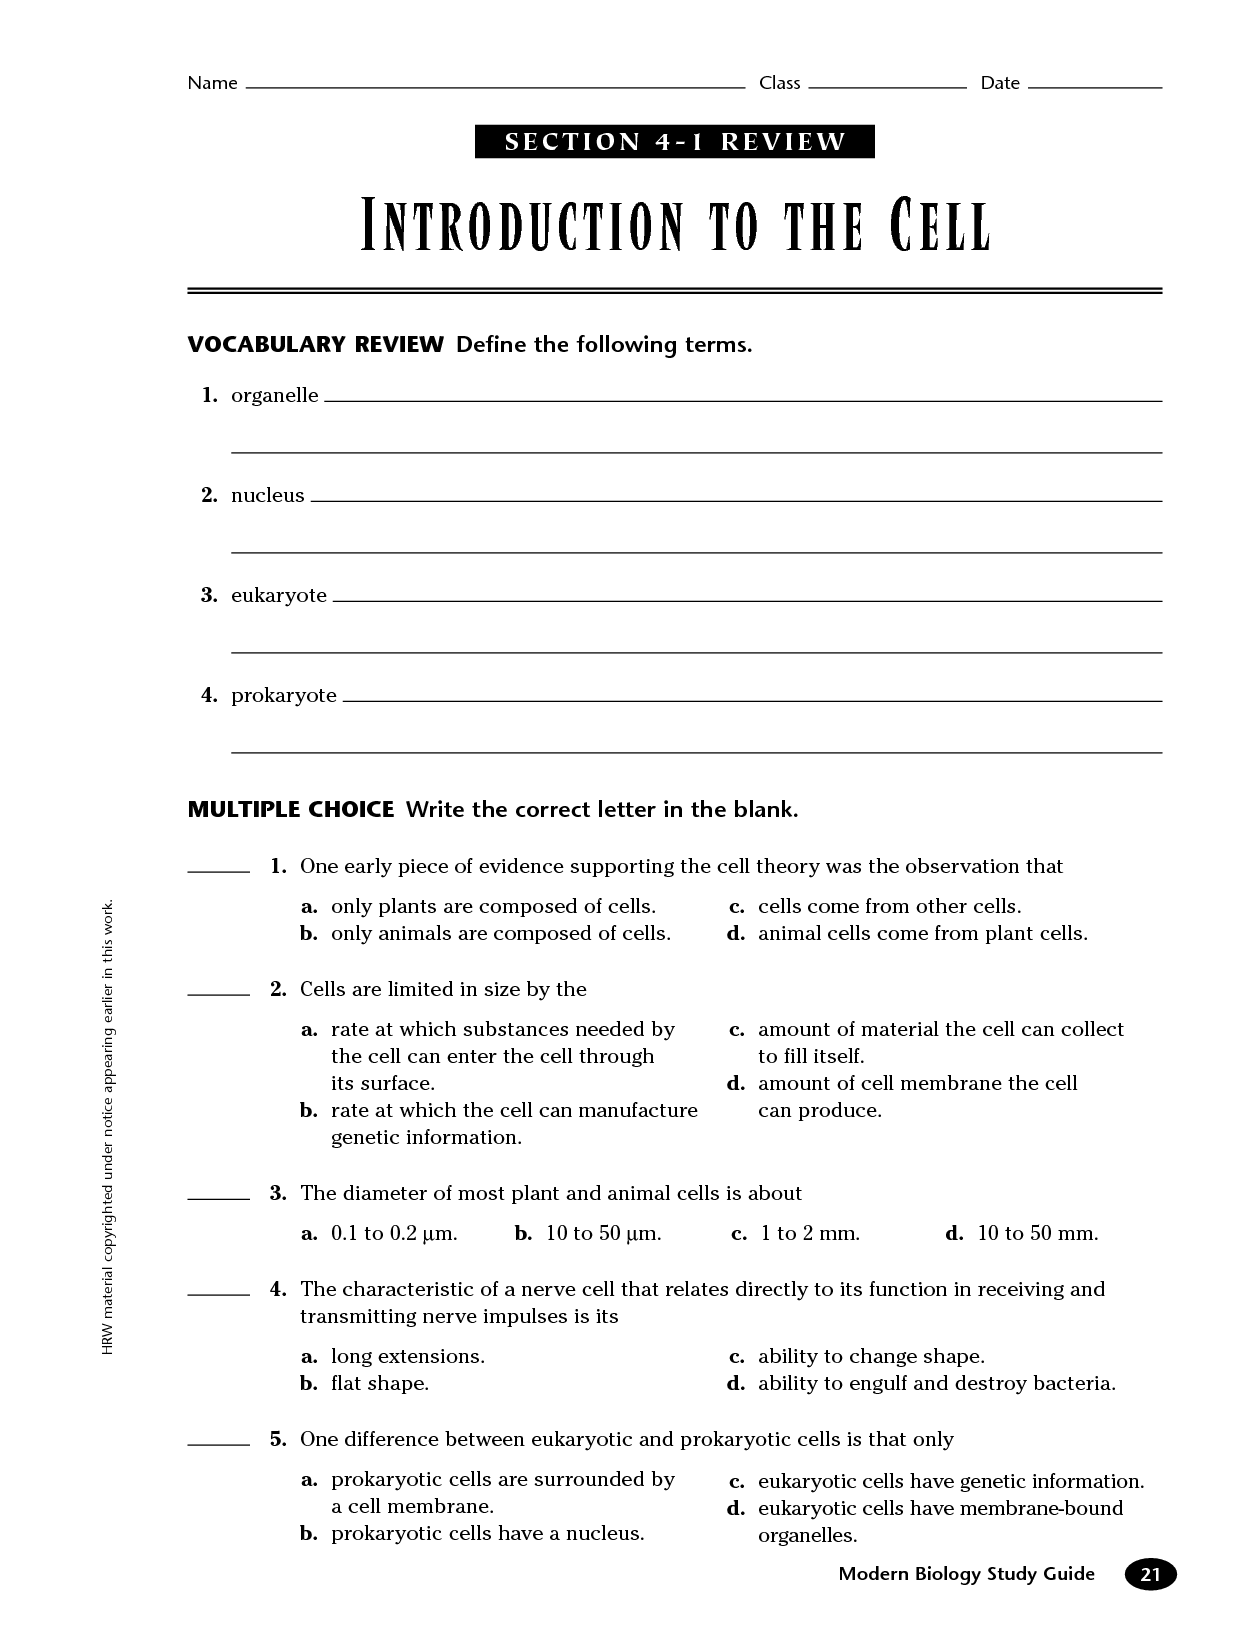 Prokaryotic and Eukaryotic Cells Worksheet Image